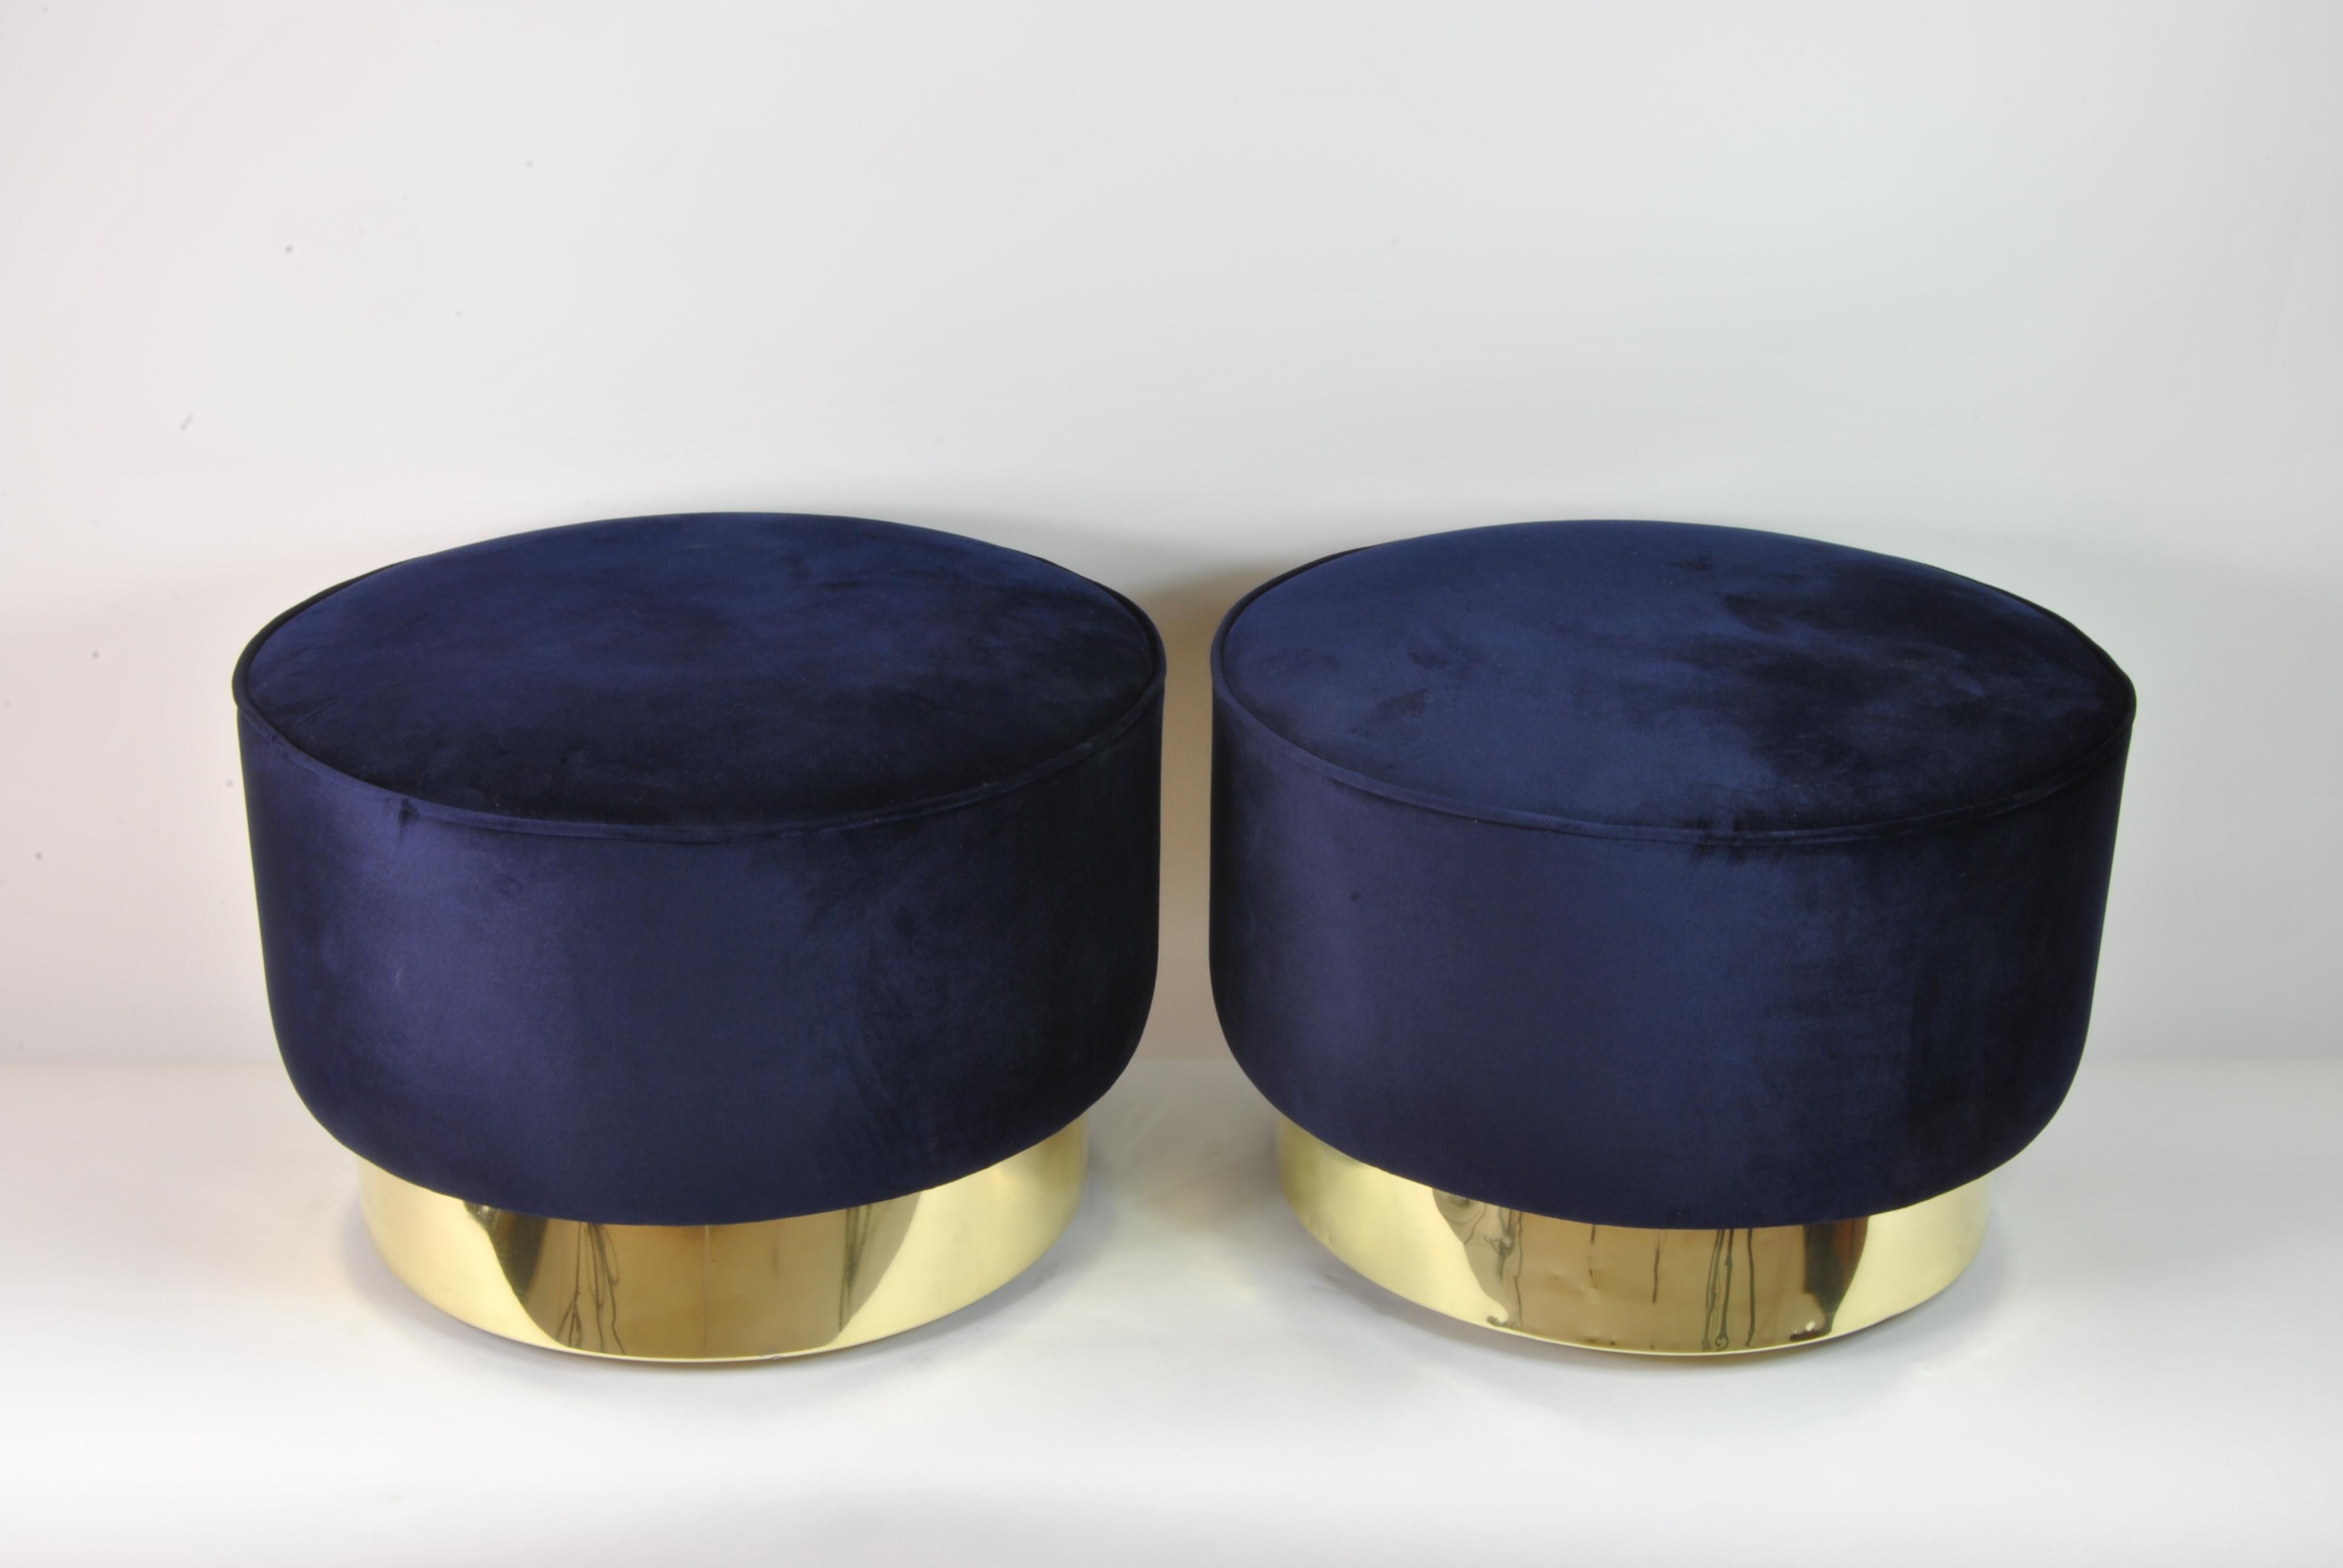 Pair of circular poufs, Italy 1970.
Brass base and cotton velvet upholstery by Dedar.